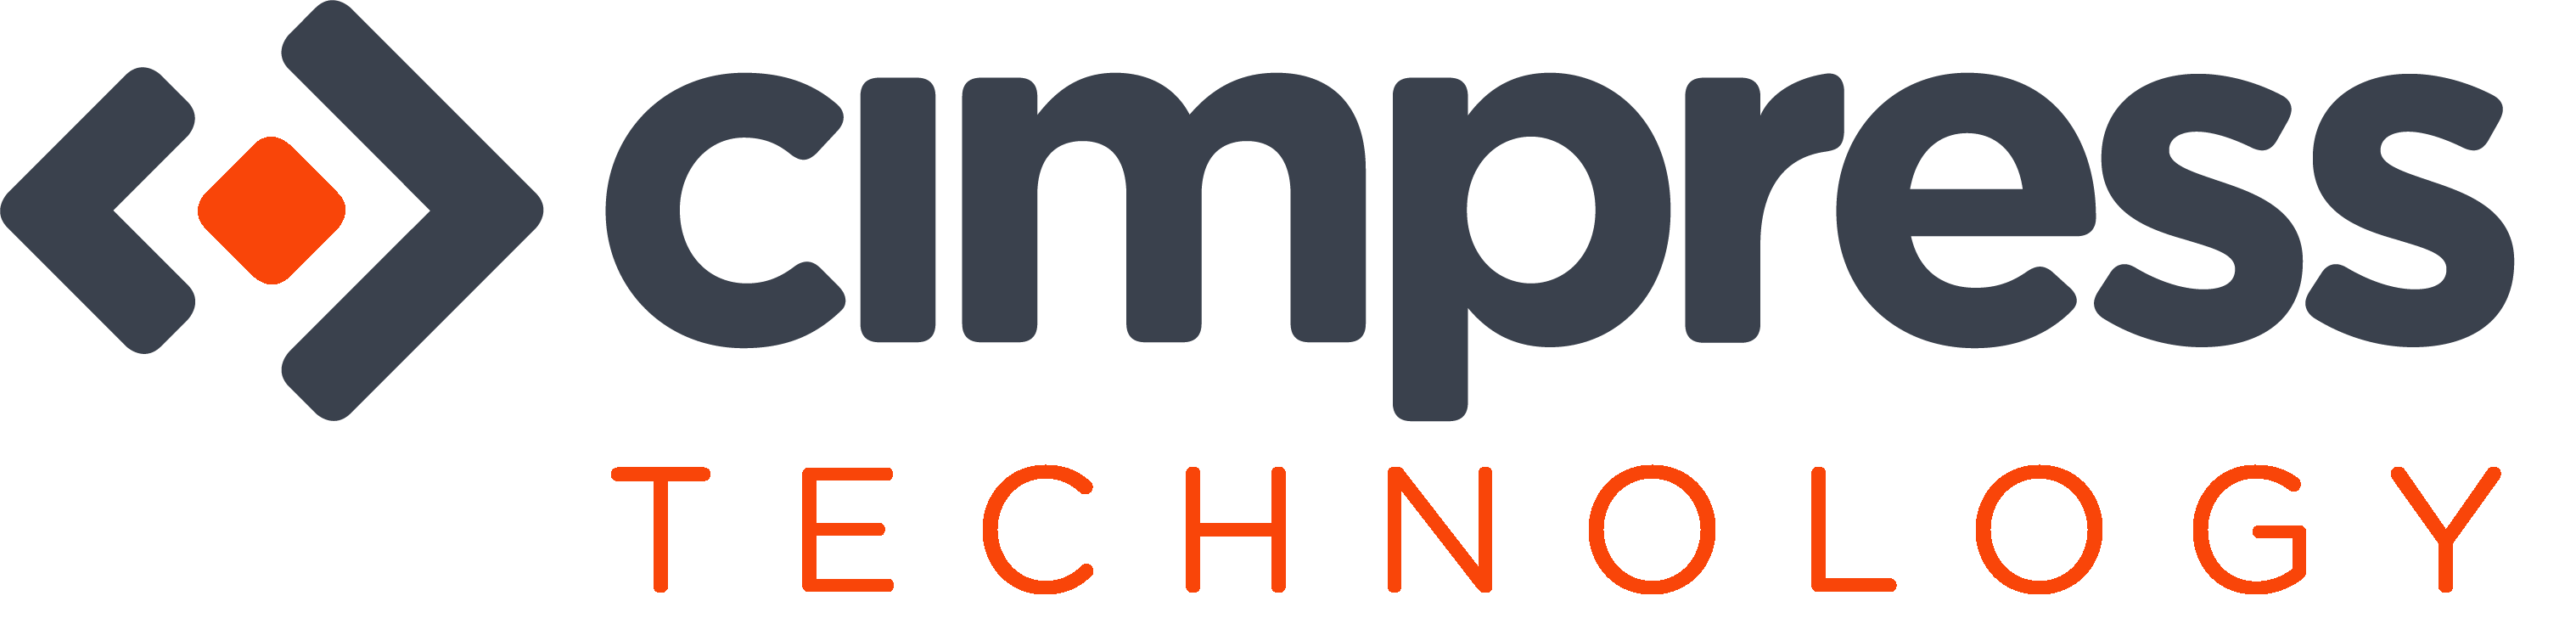 Logo Cimpress Technology